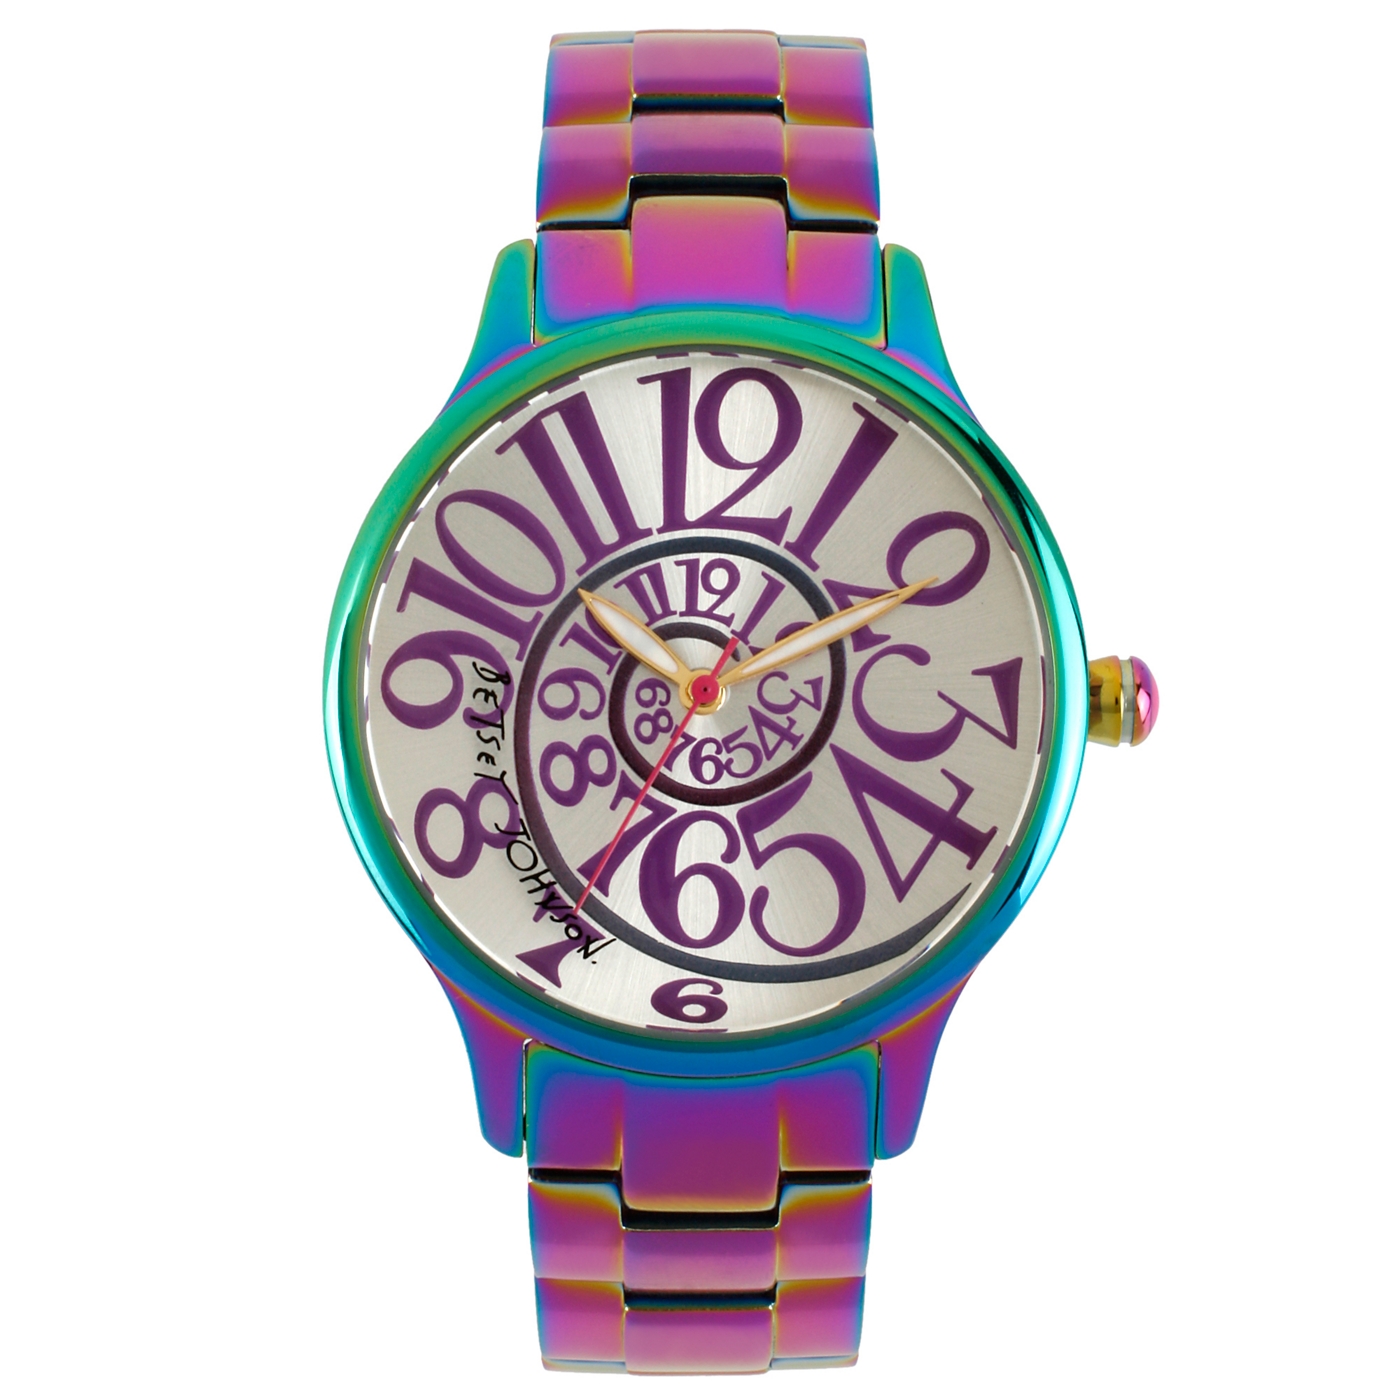 Betsey Johnson Ladies rainbow spiral numbered bracelet watch